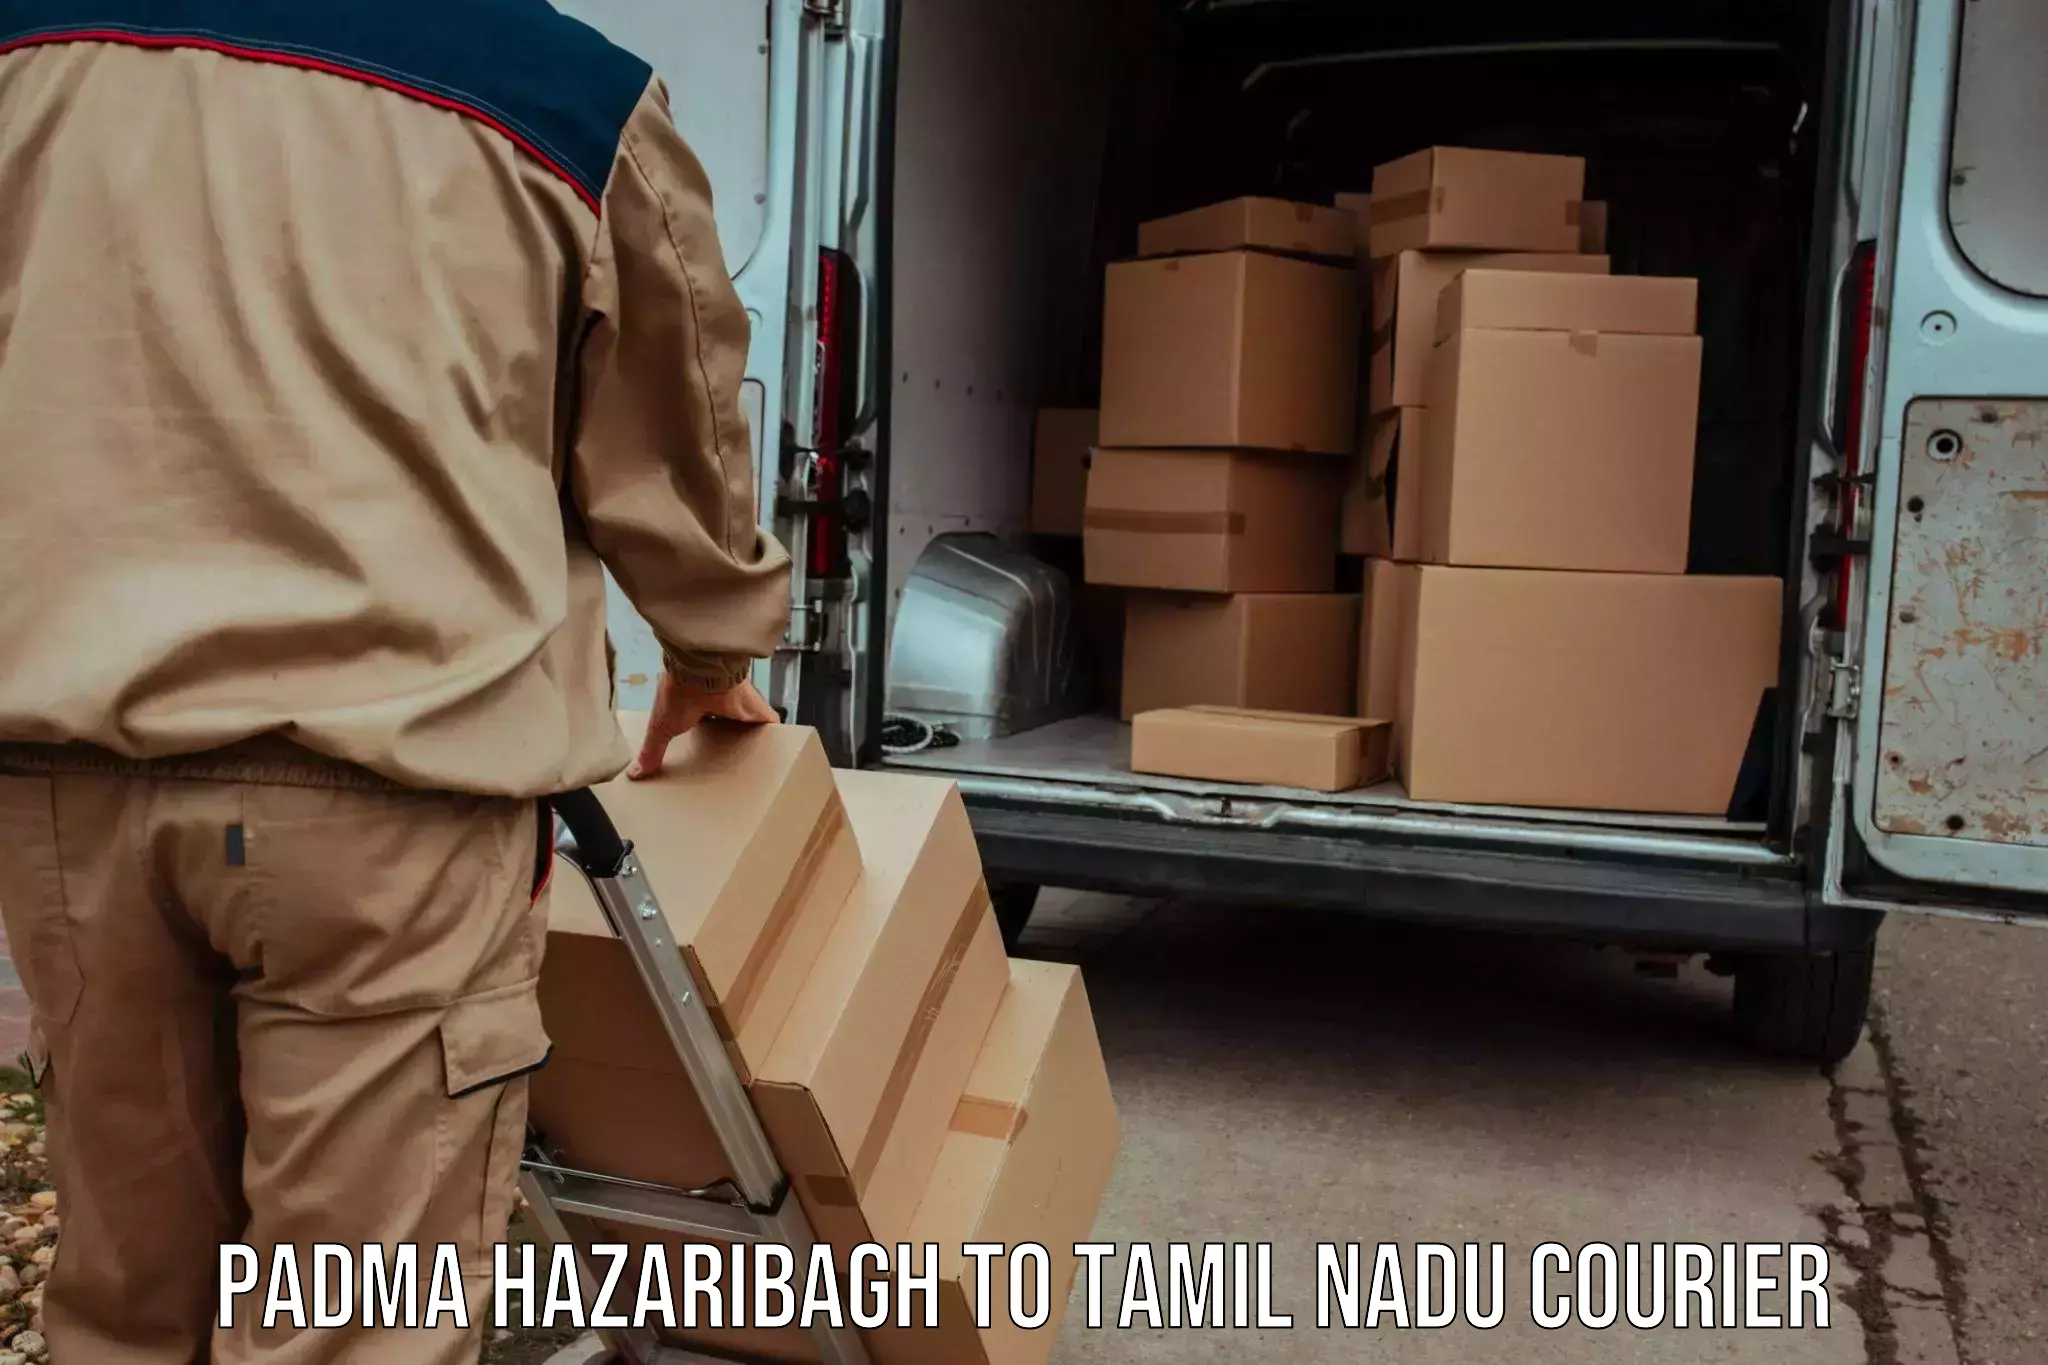 Courier service comparison Padma Hazaribagh to Tamil Nadu